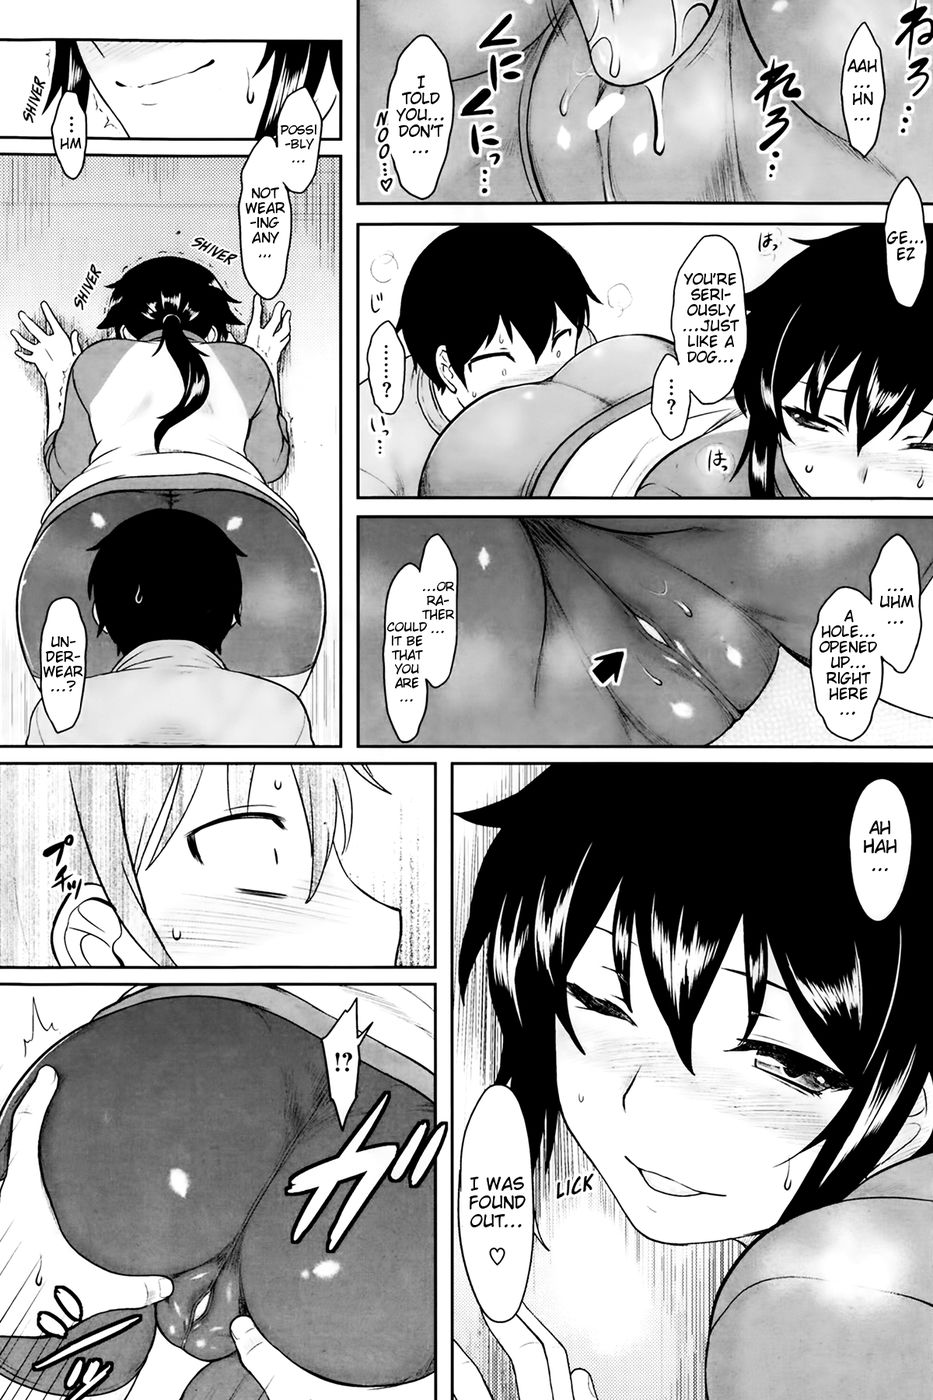 Hentai Manga Comic-Aromatic athletic-Read-11